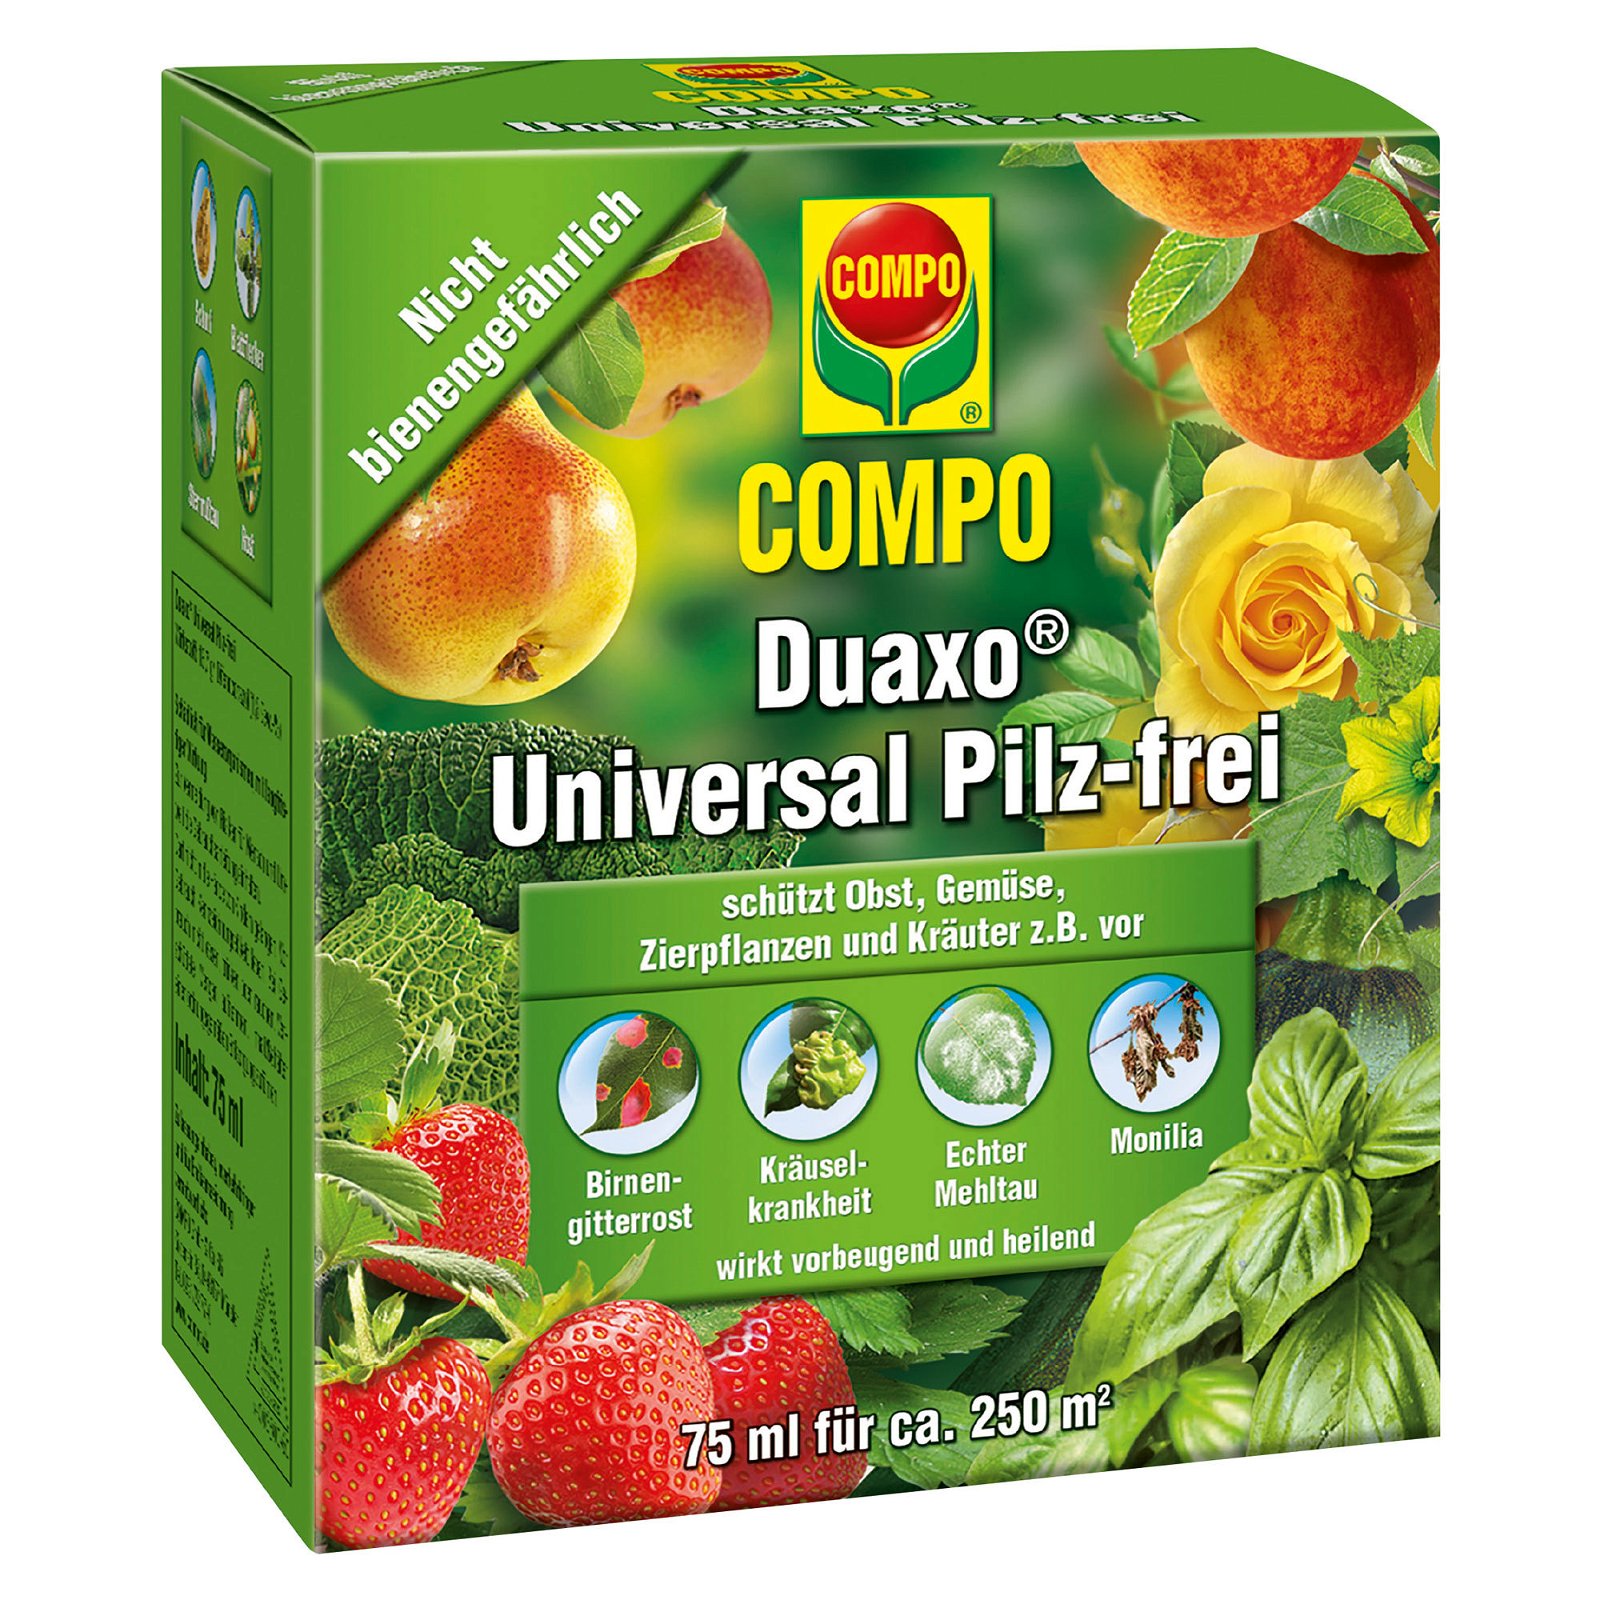 Compo Duaxo Universal Pilzfrei, 75 ml